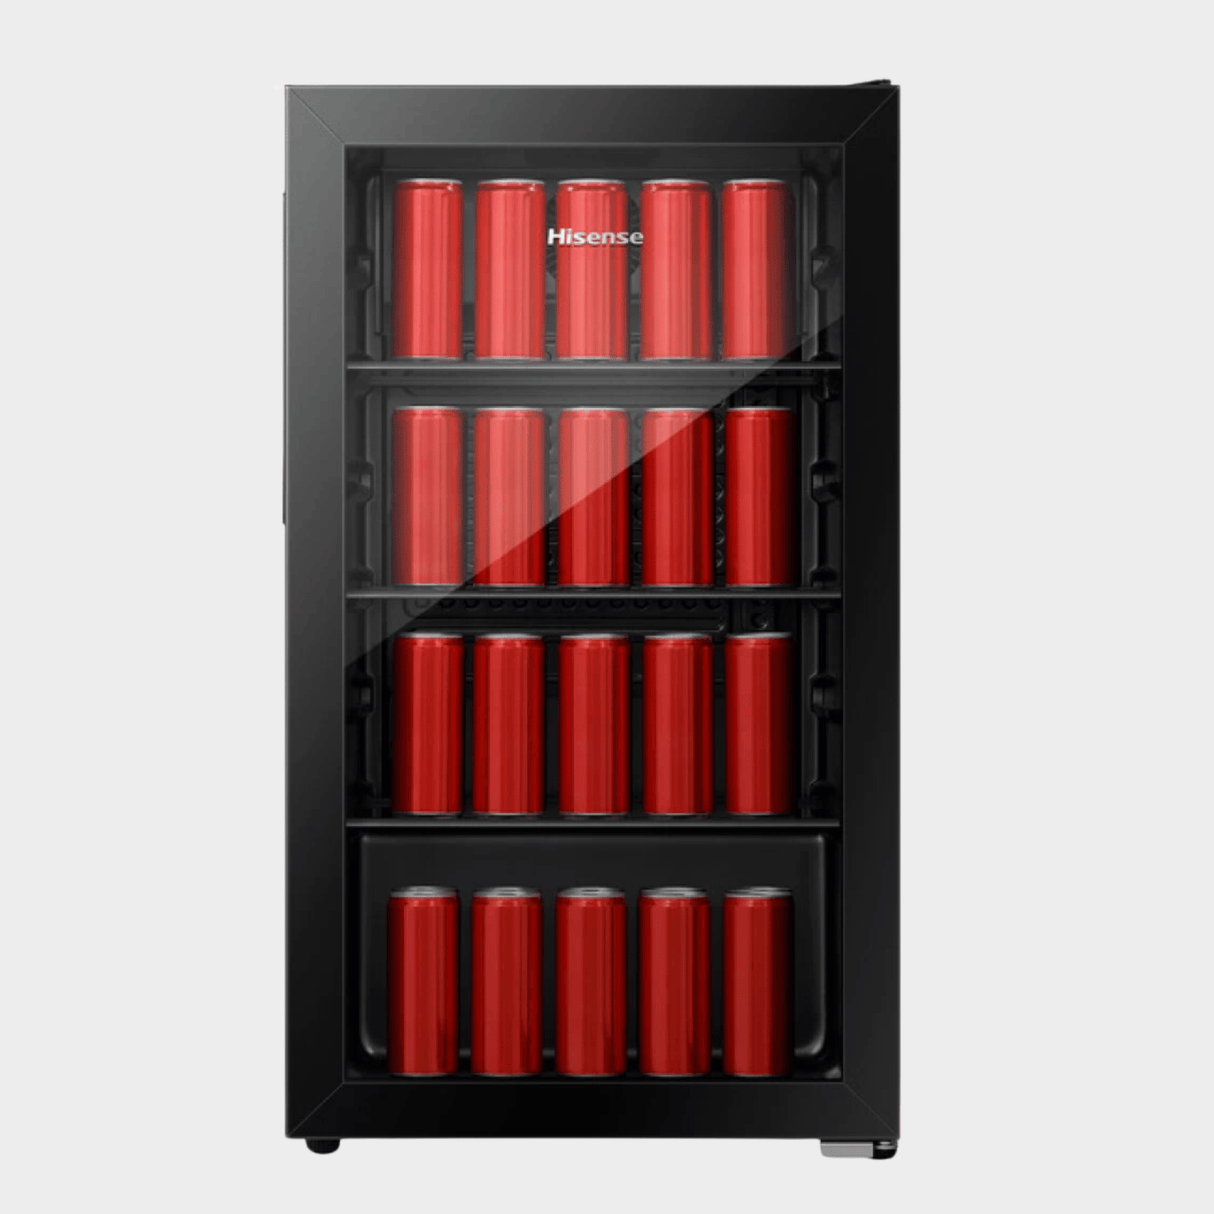 Hisense 94L Glass Door Beverage Cooler Refrigerator, Display Fridge Chiller – Black